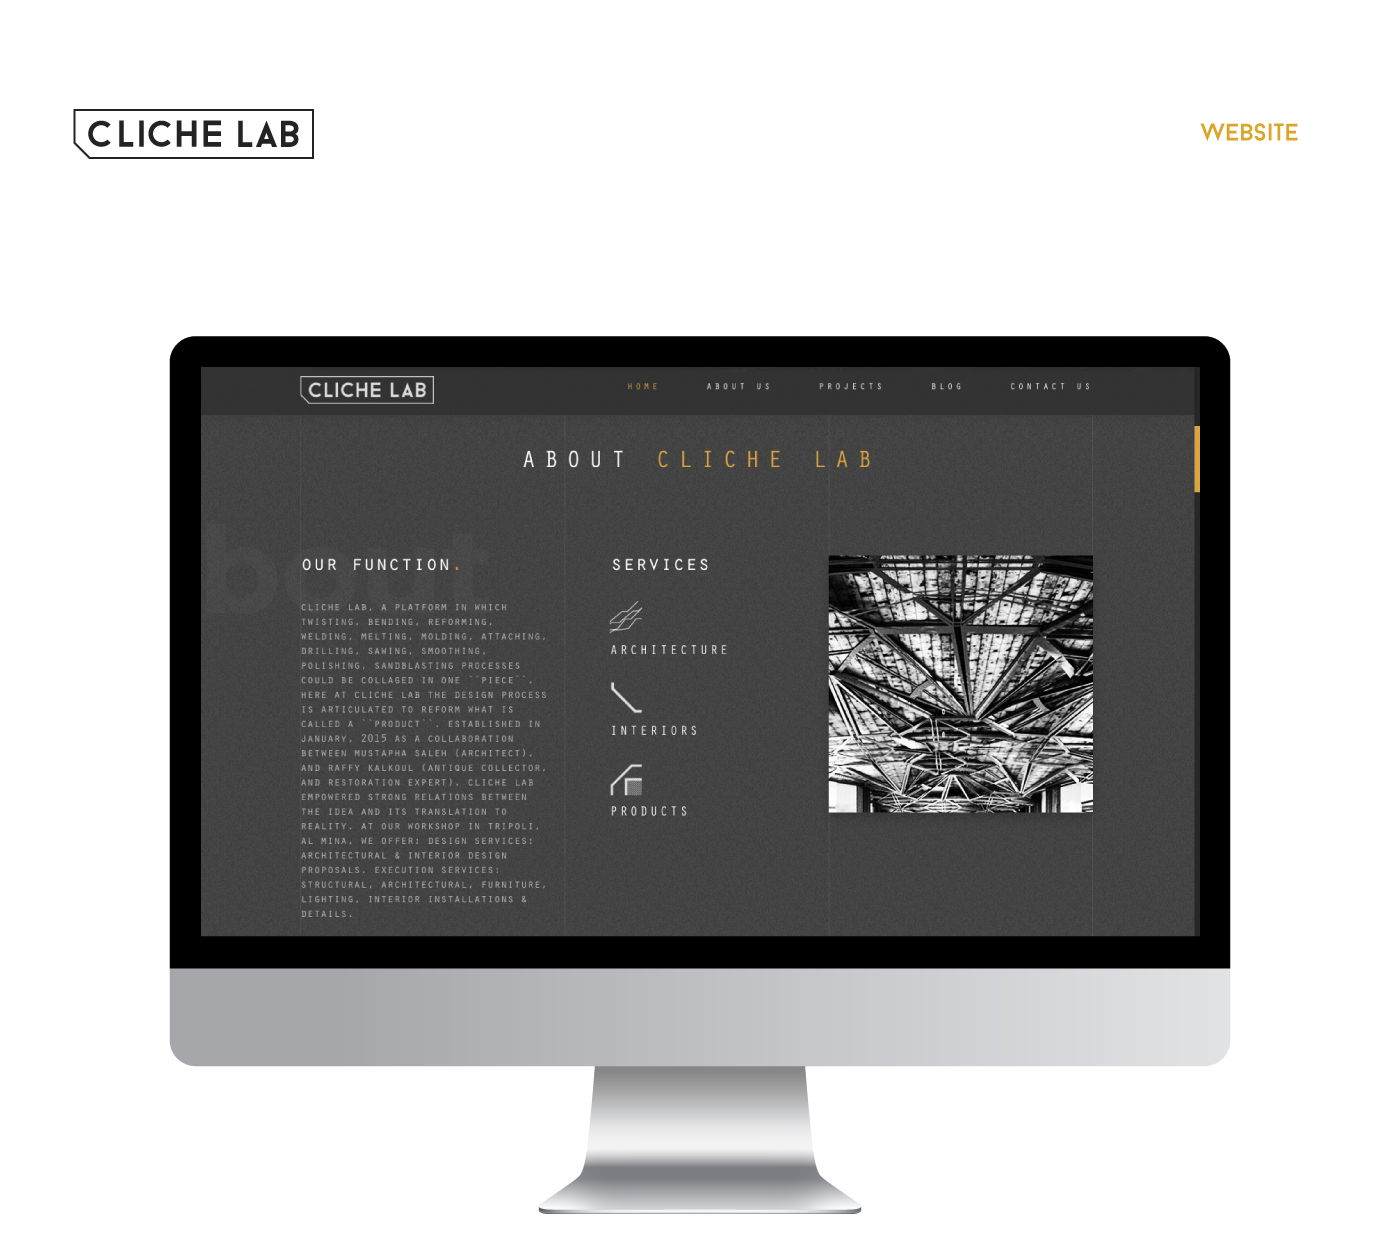 Website architectute industrial dark branding 